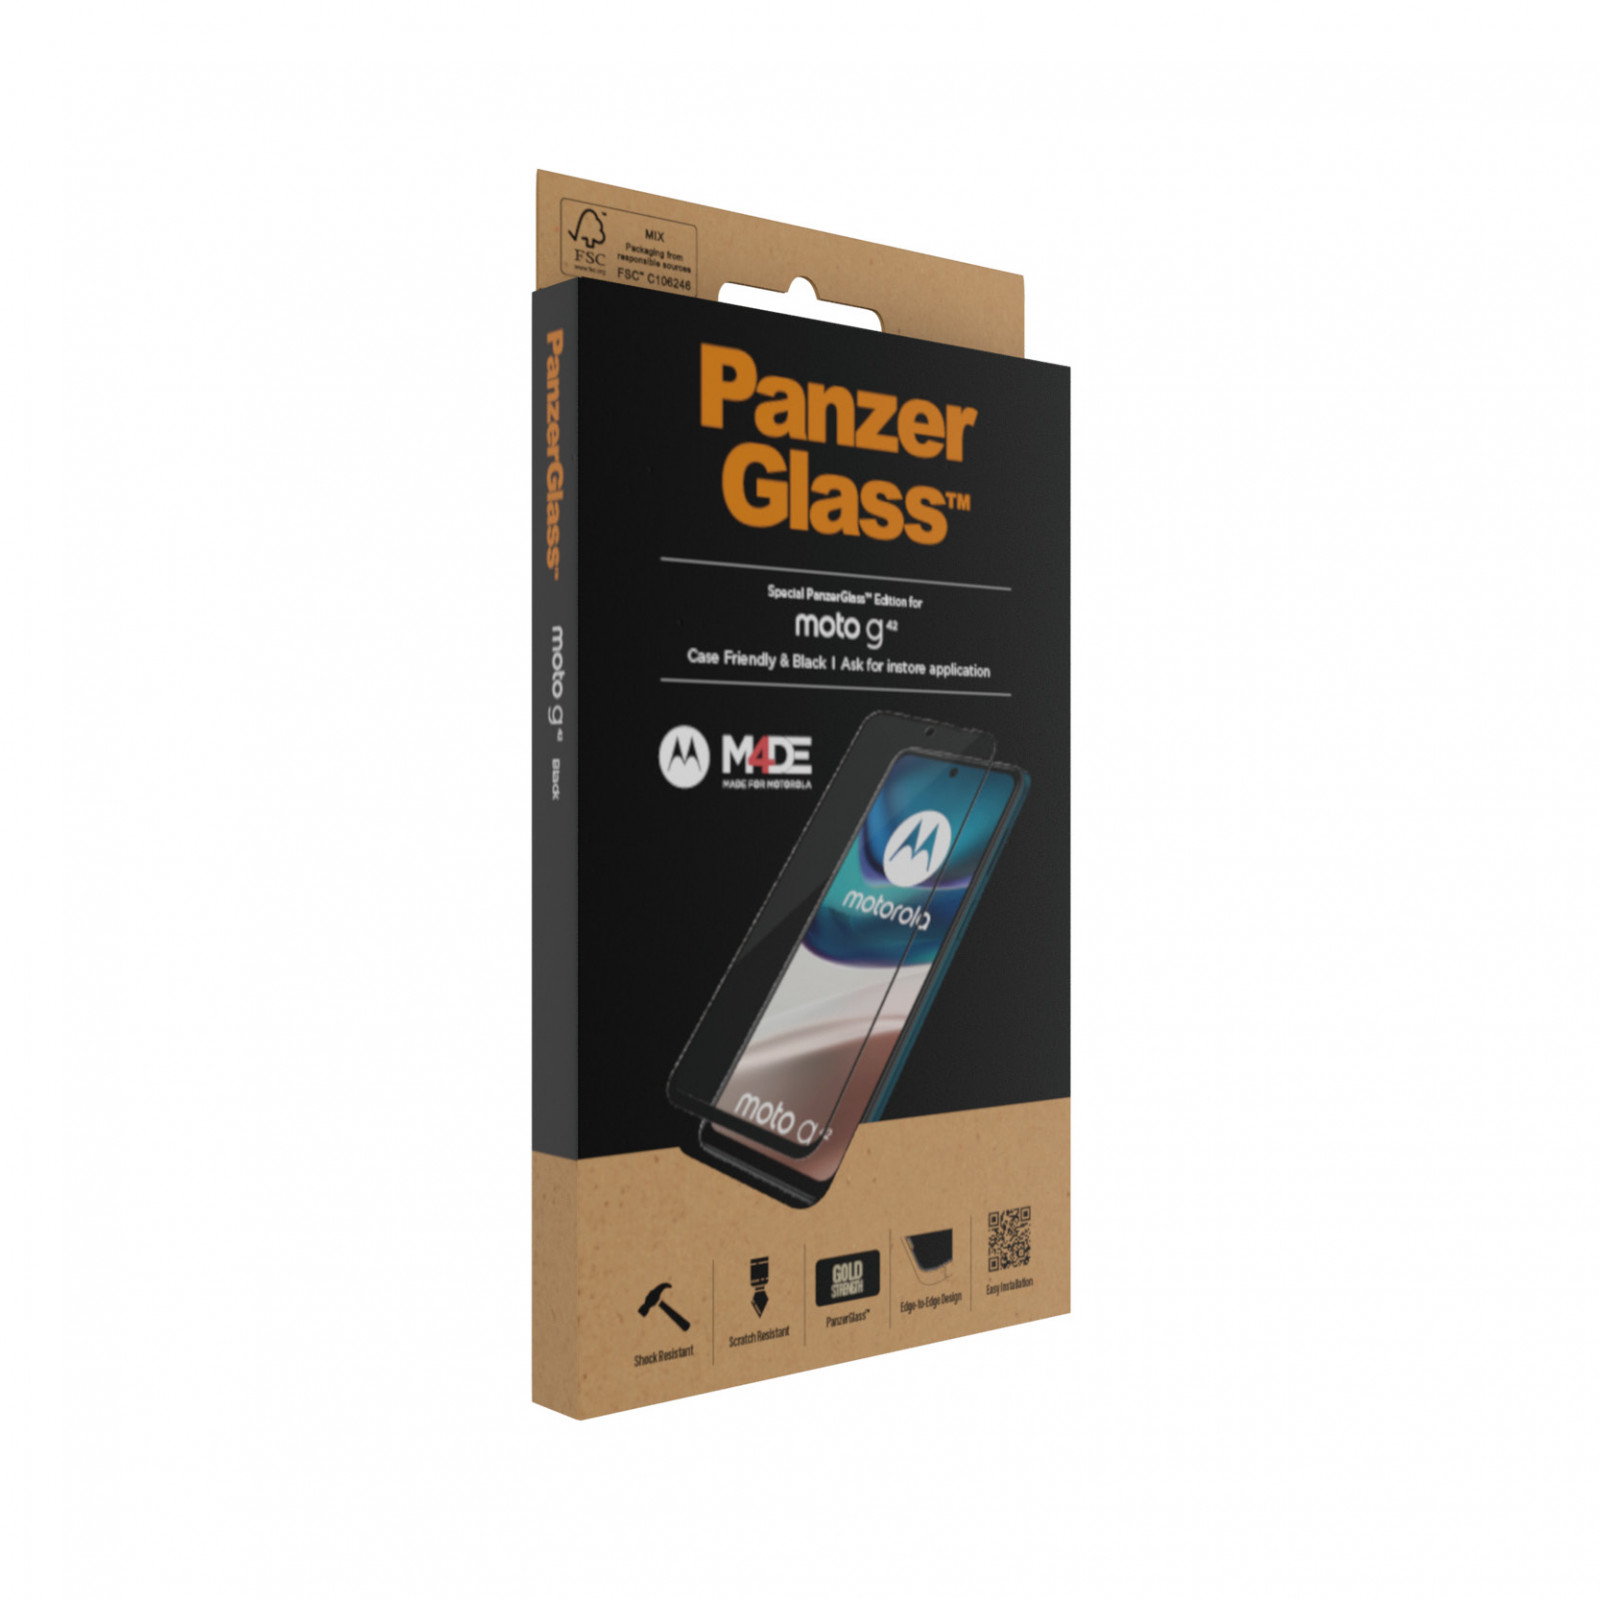 Стъклен протектор PanzerGlass за Motorola Moto G42 CaseFriendly - Черен